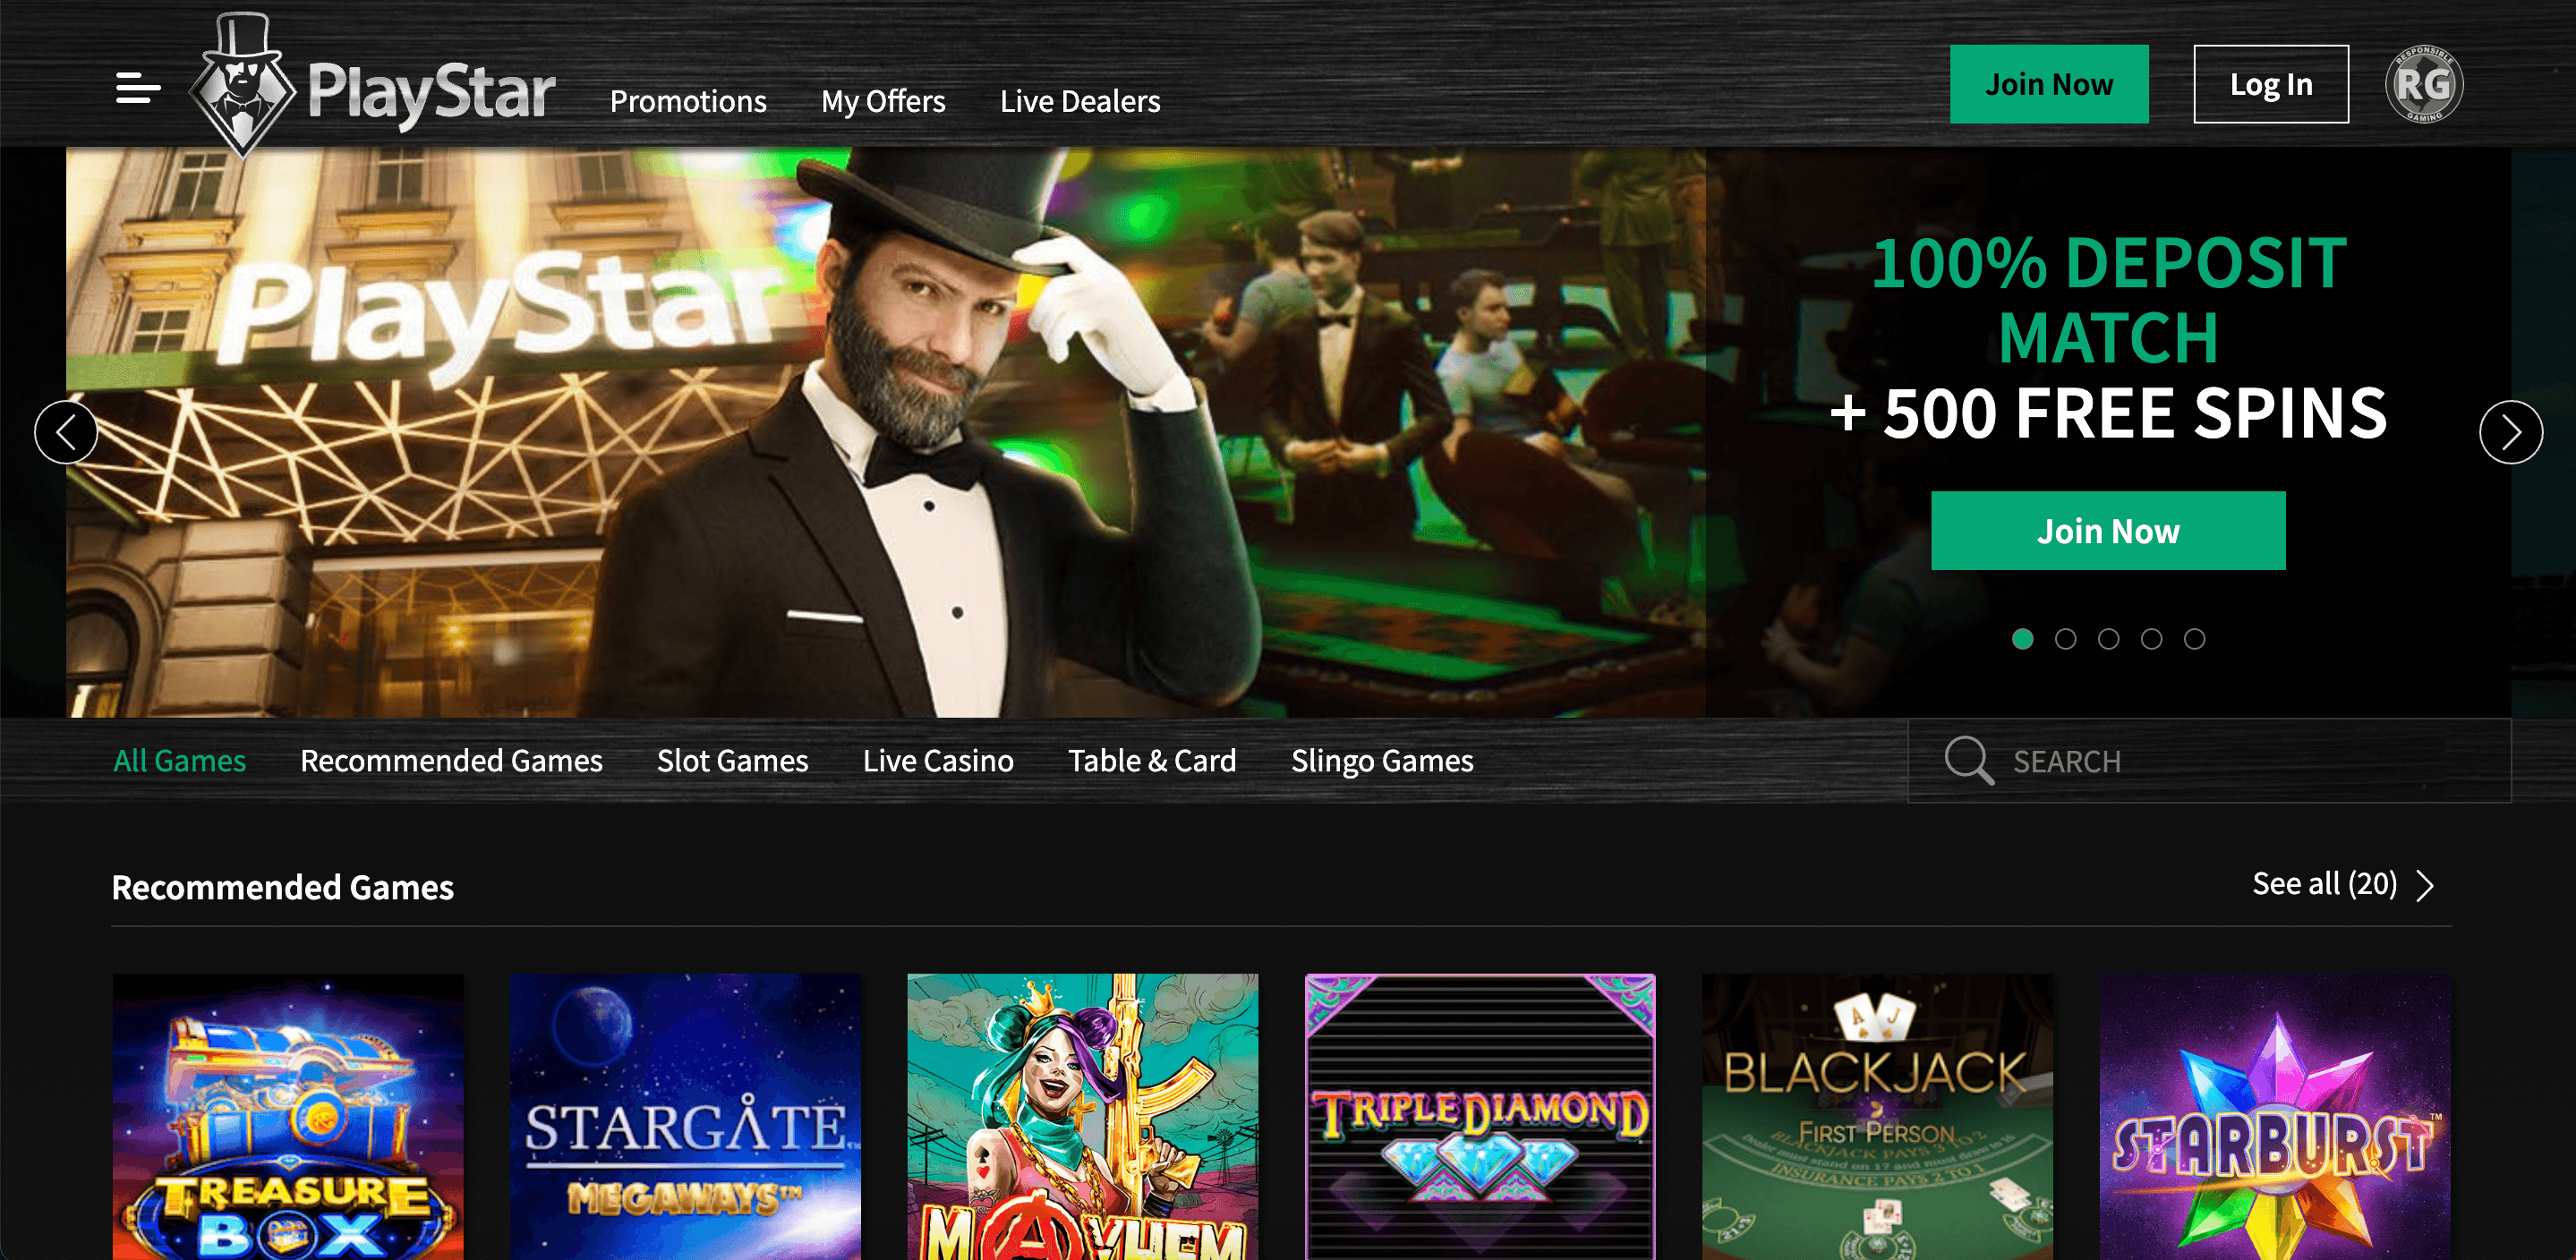 PlayStar Casino NJ Home Page